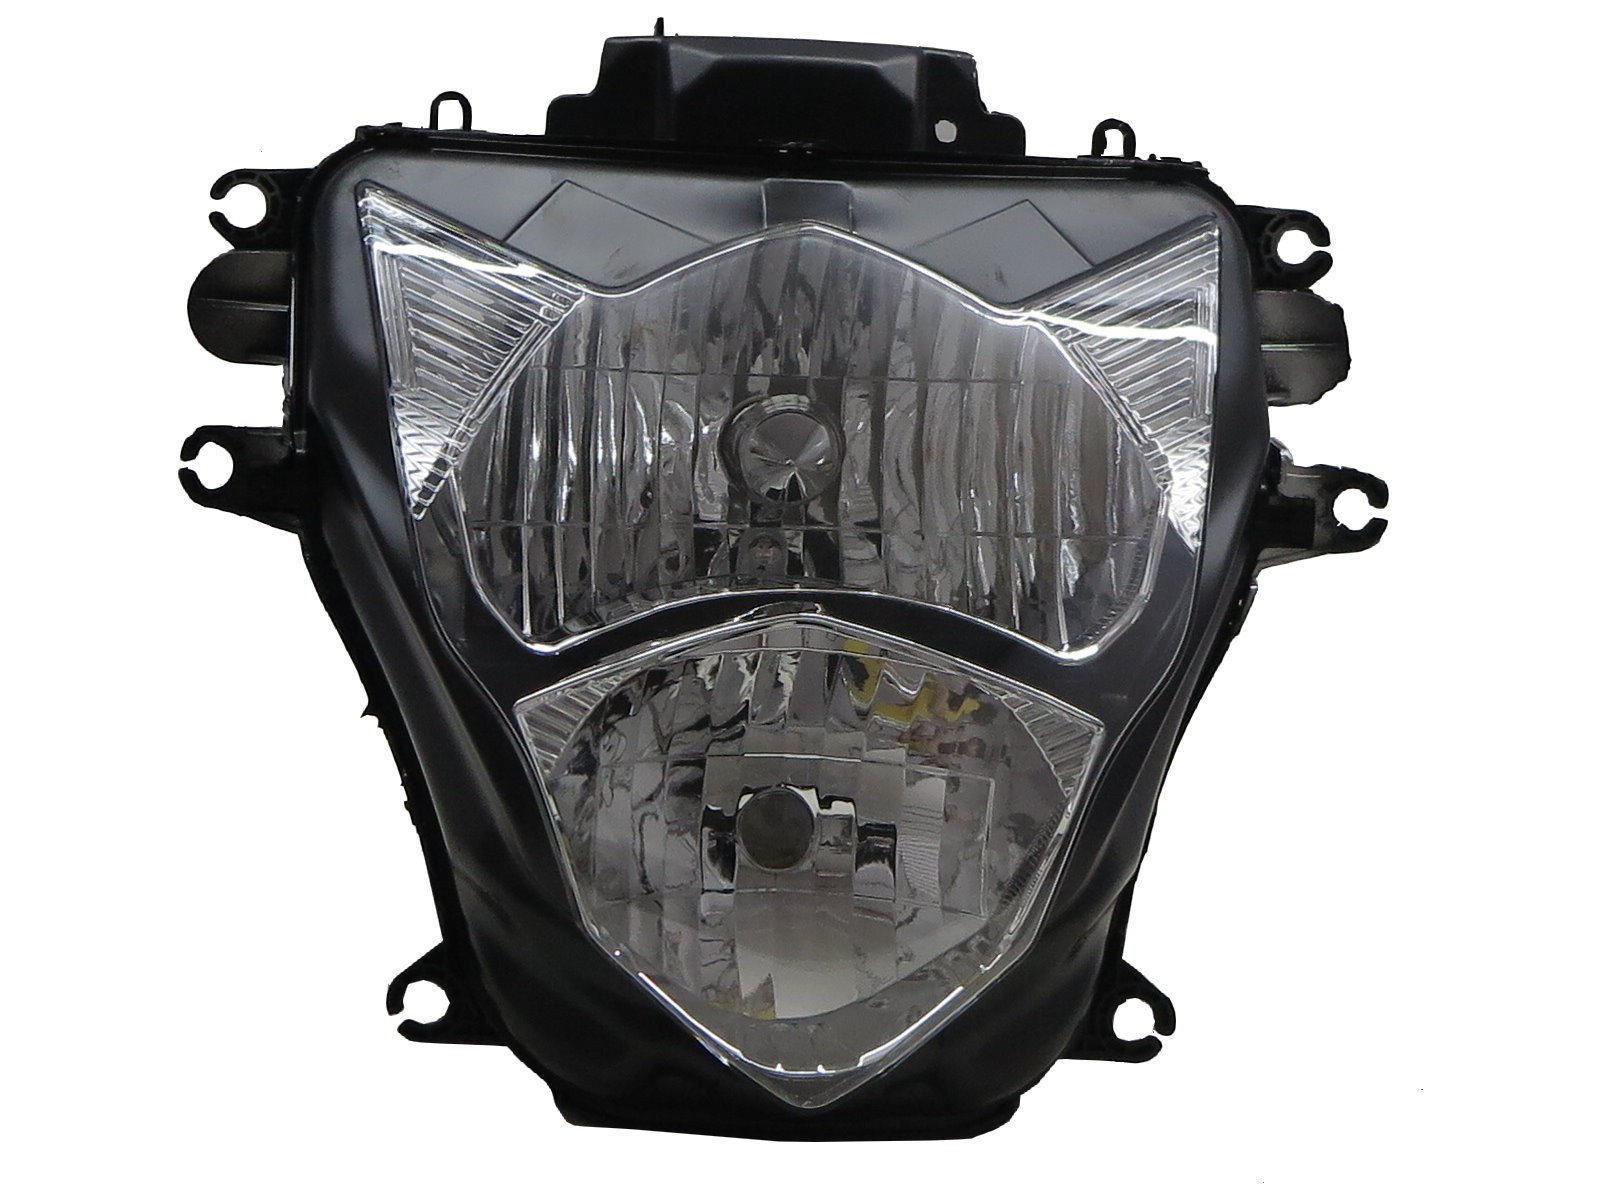 CrazyTheGod GSX-R series GSX-R600 Seventh generation 2011-2014 Motorcycles Clear Headlight Headlamp Chrome for SUZUKI